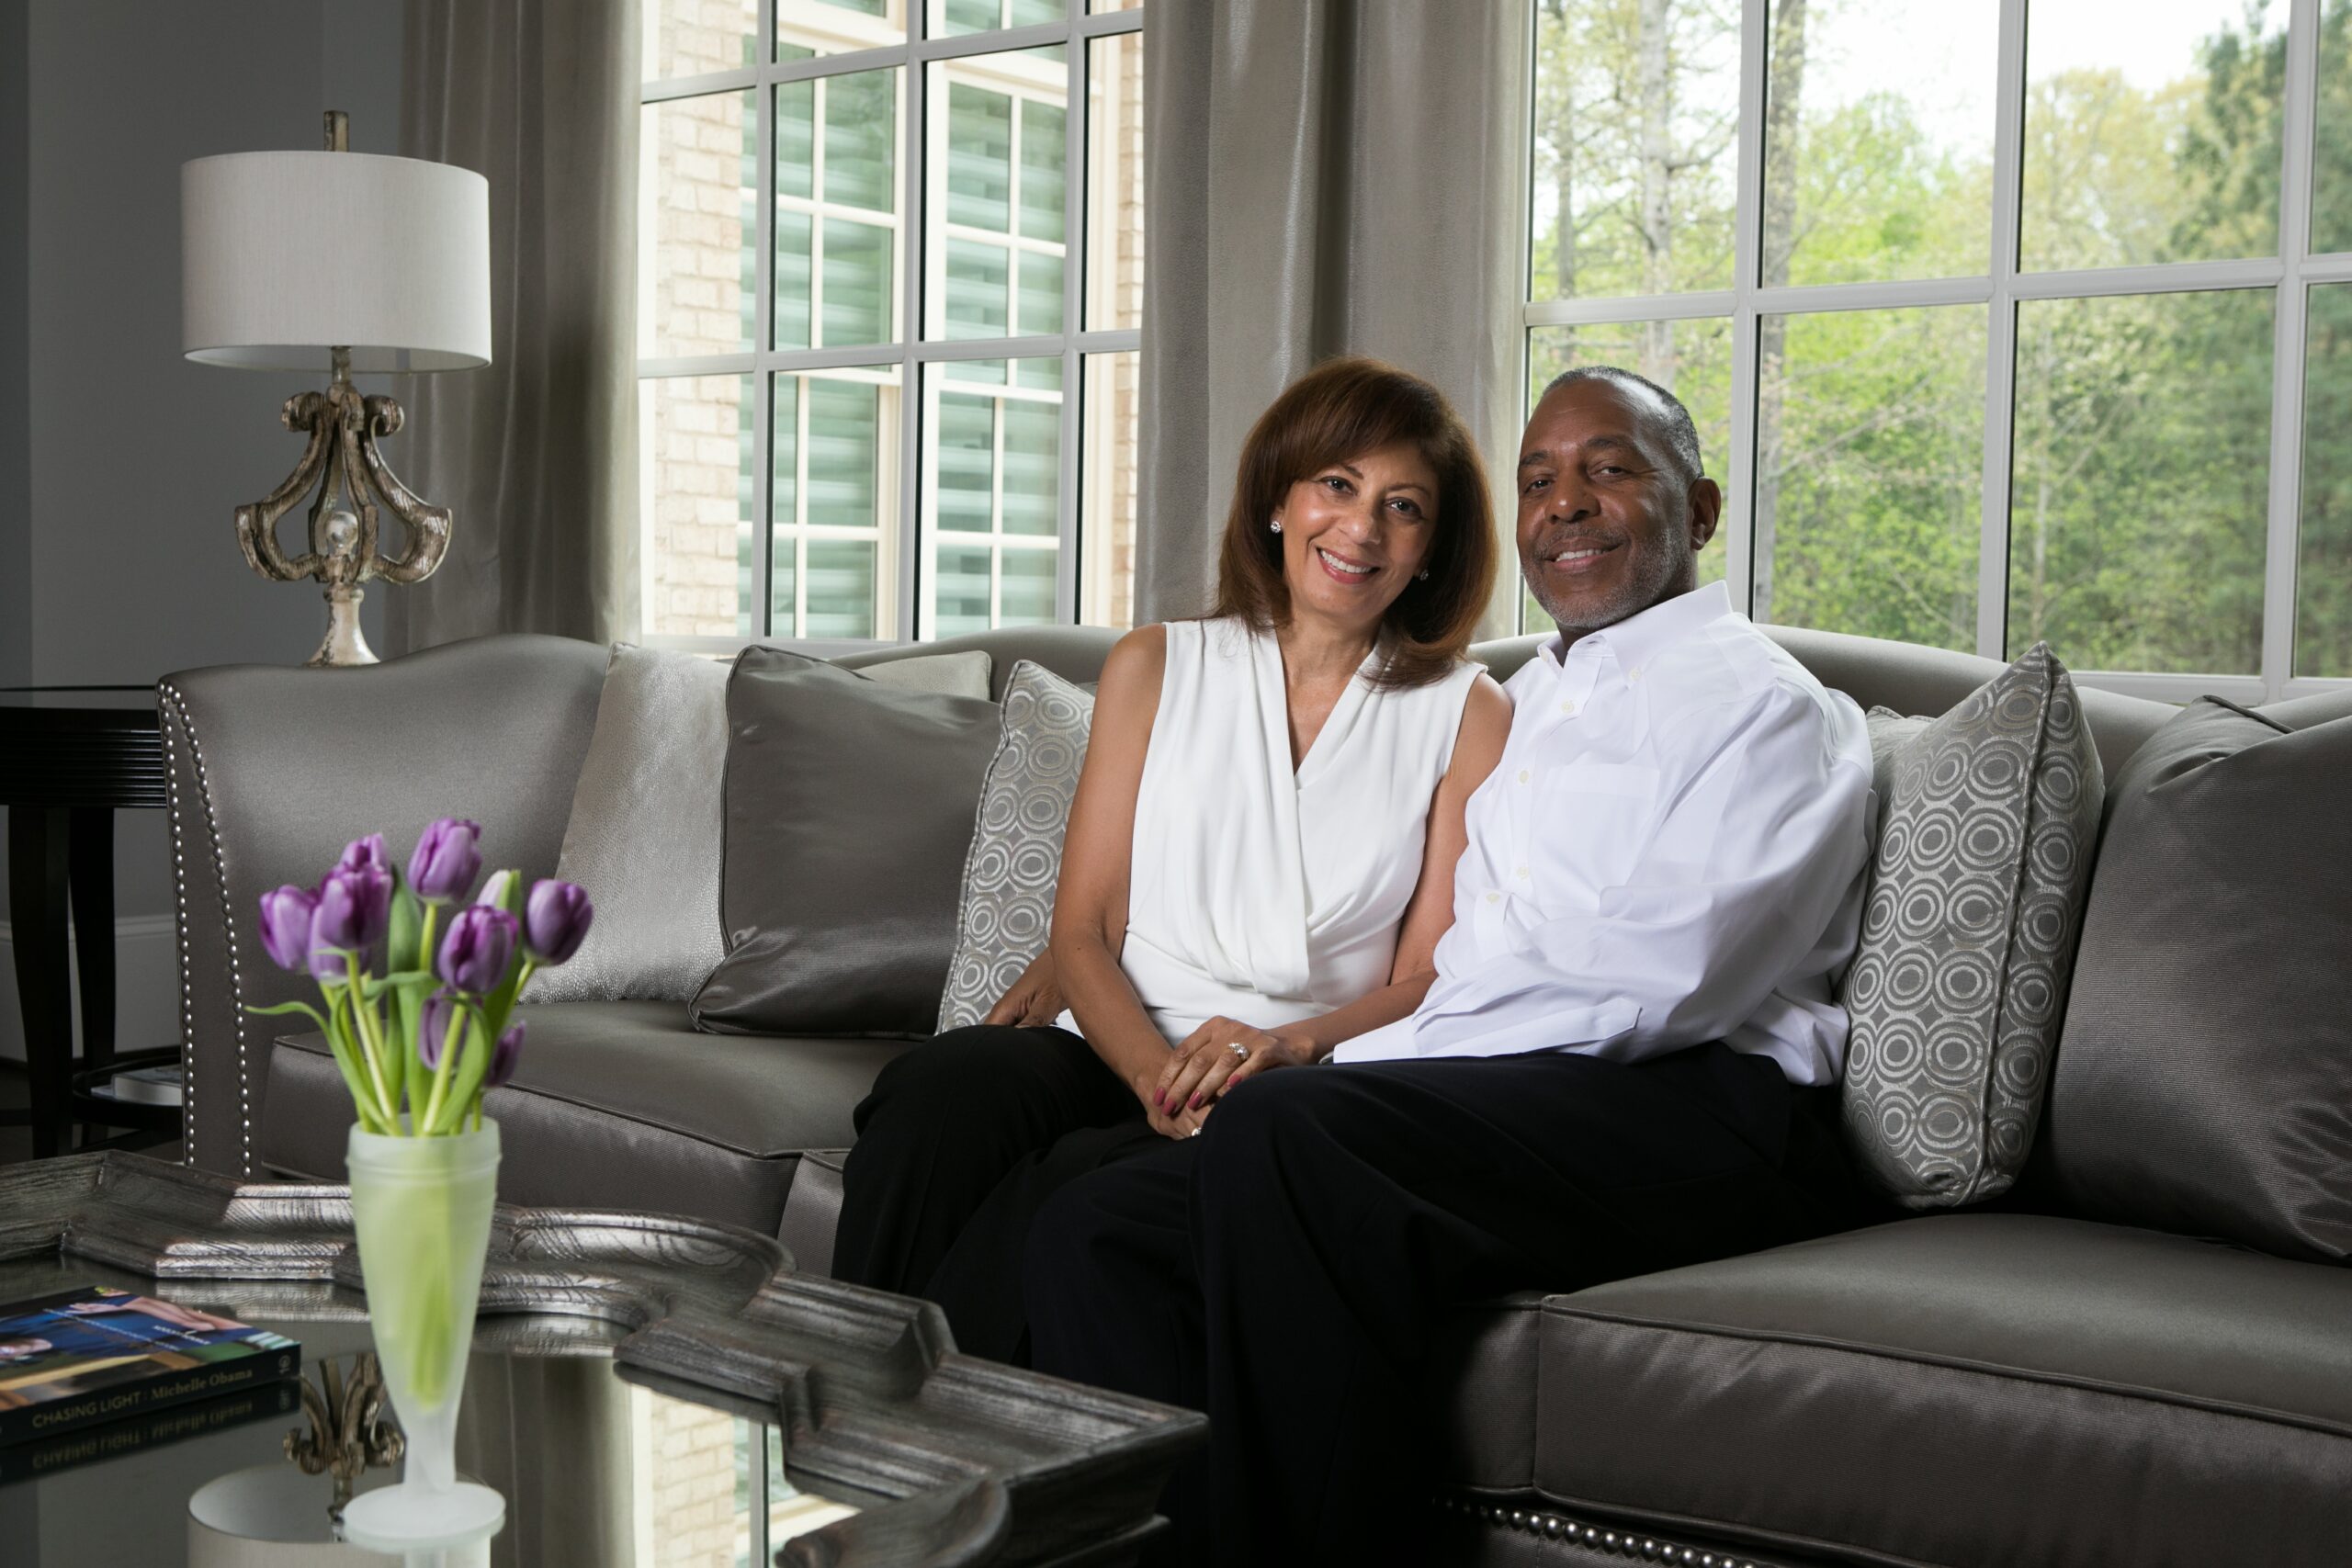 Featured image for “Inspired philanthropy: David and Linda Ballard”